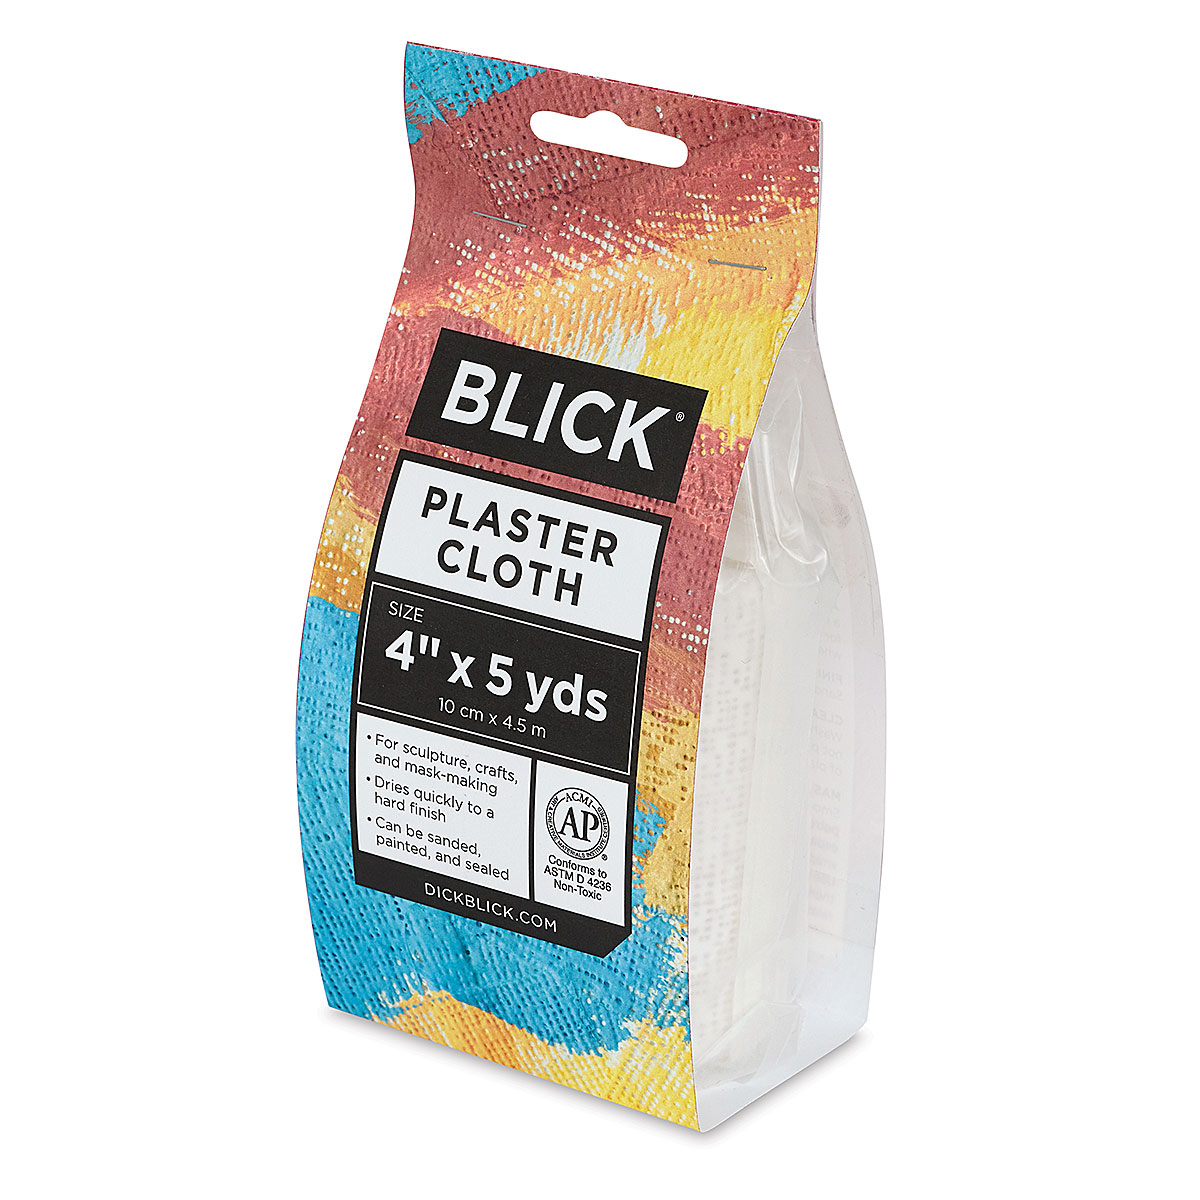 Blick Plaster Cloth